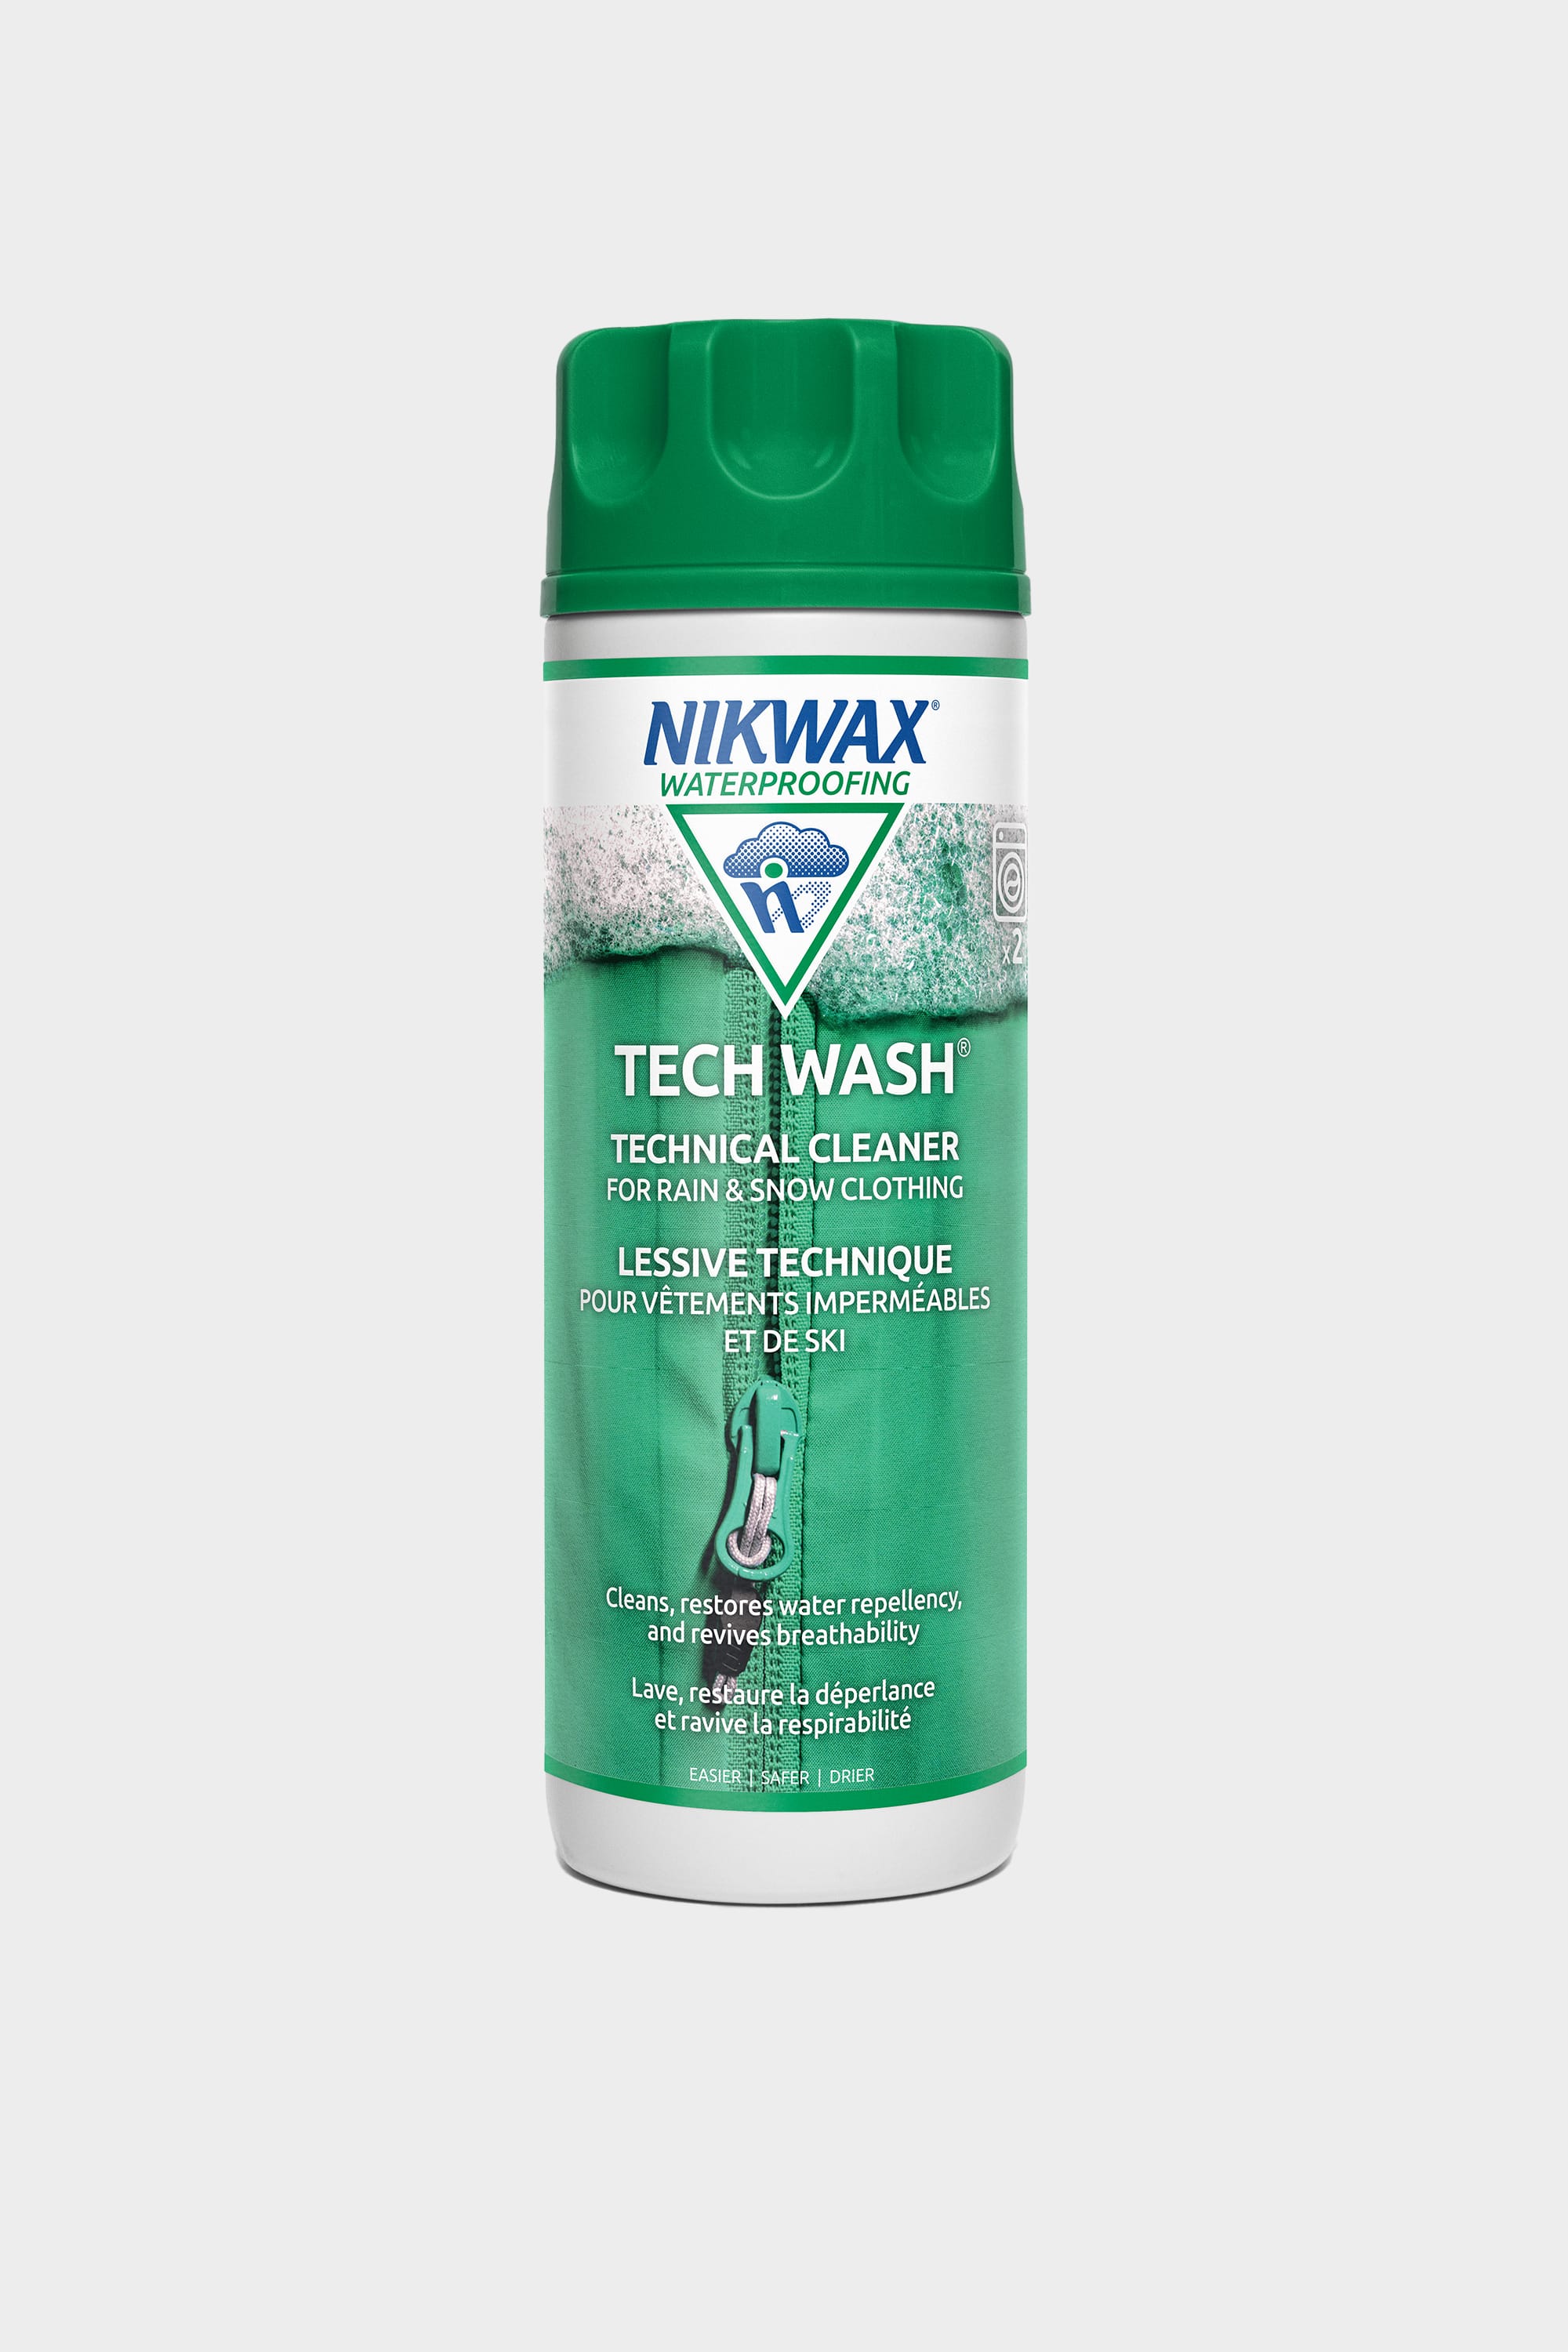 Free Nikwax Down Wash Direct